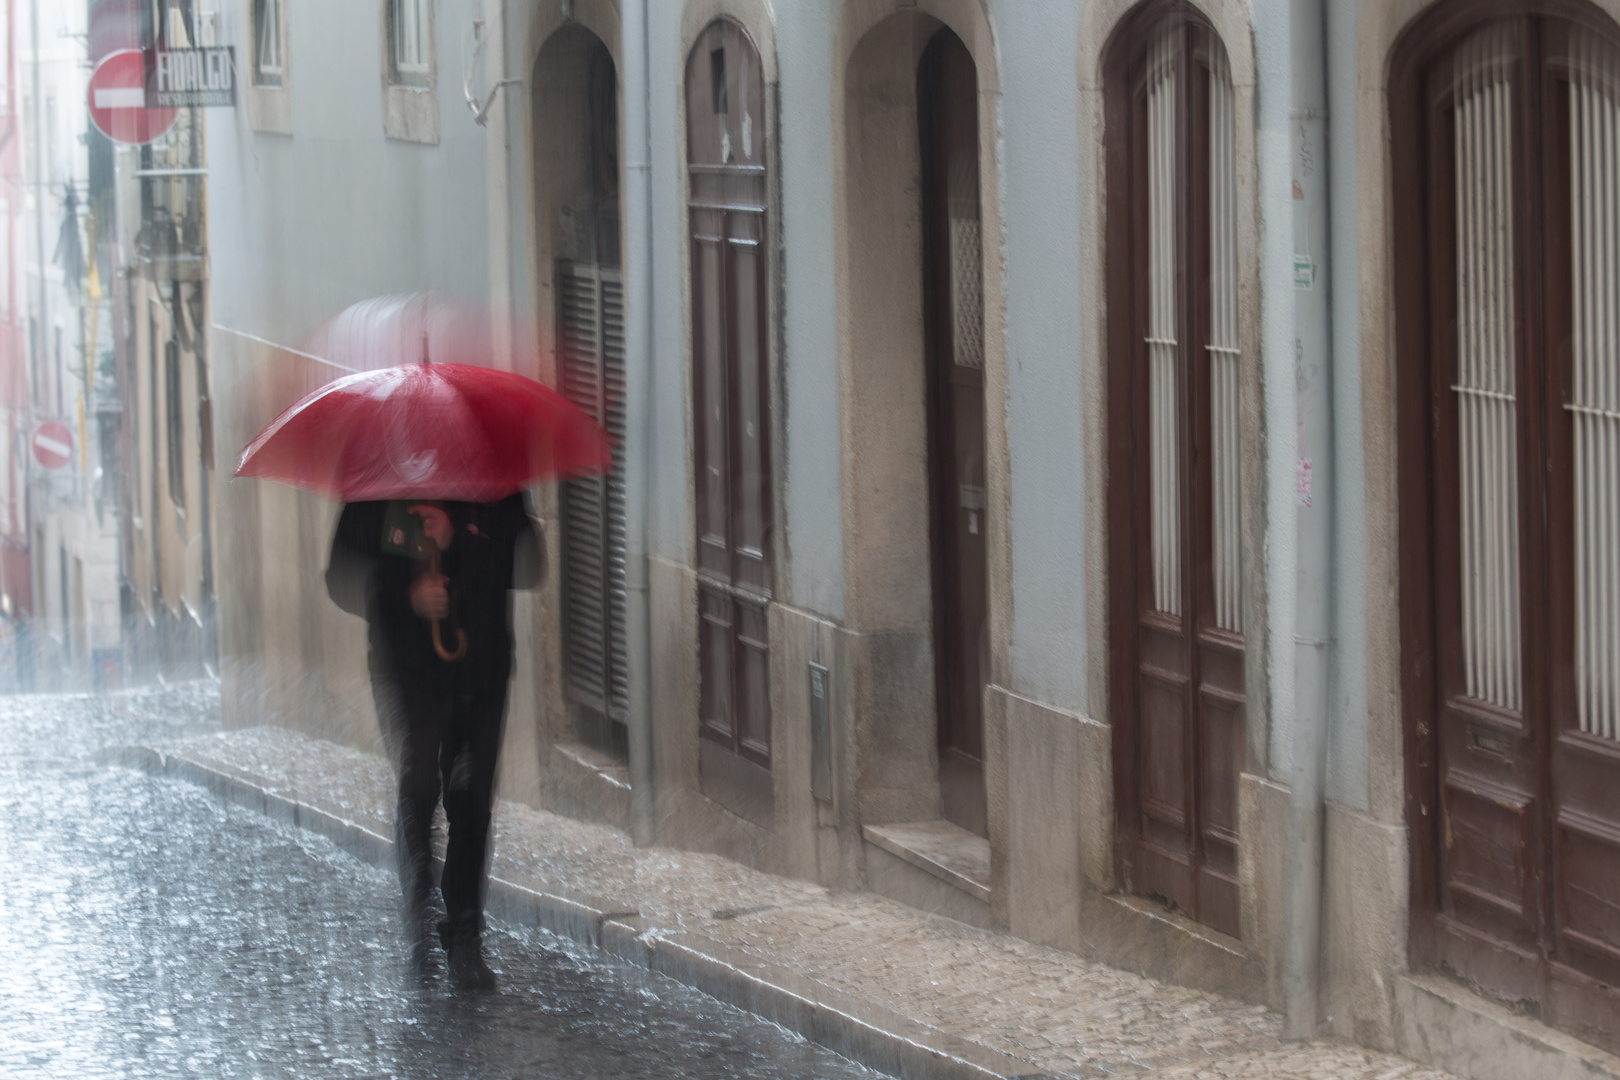 Raining in Lisboa